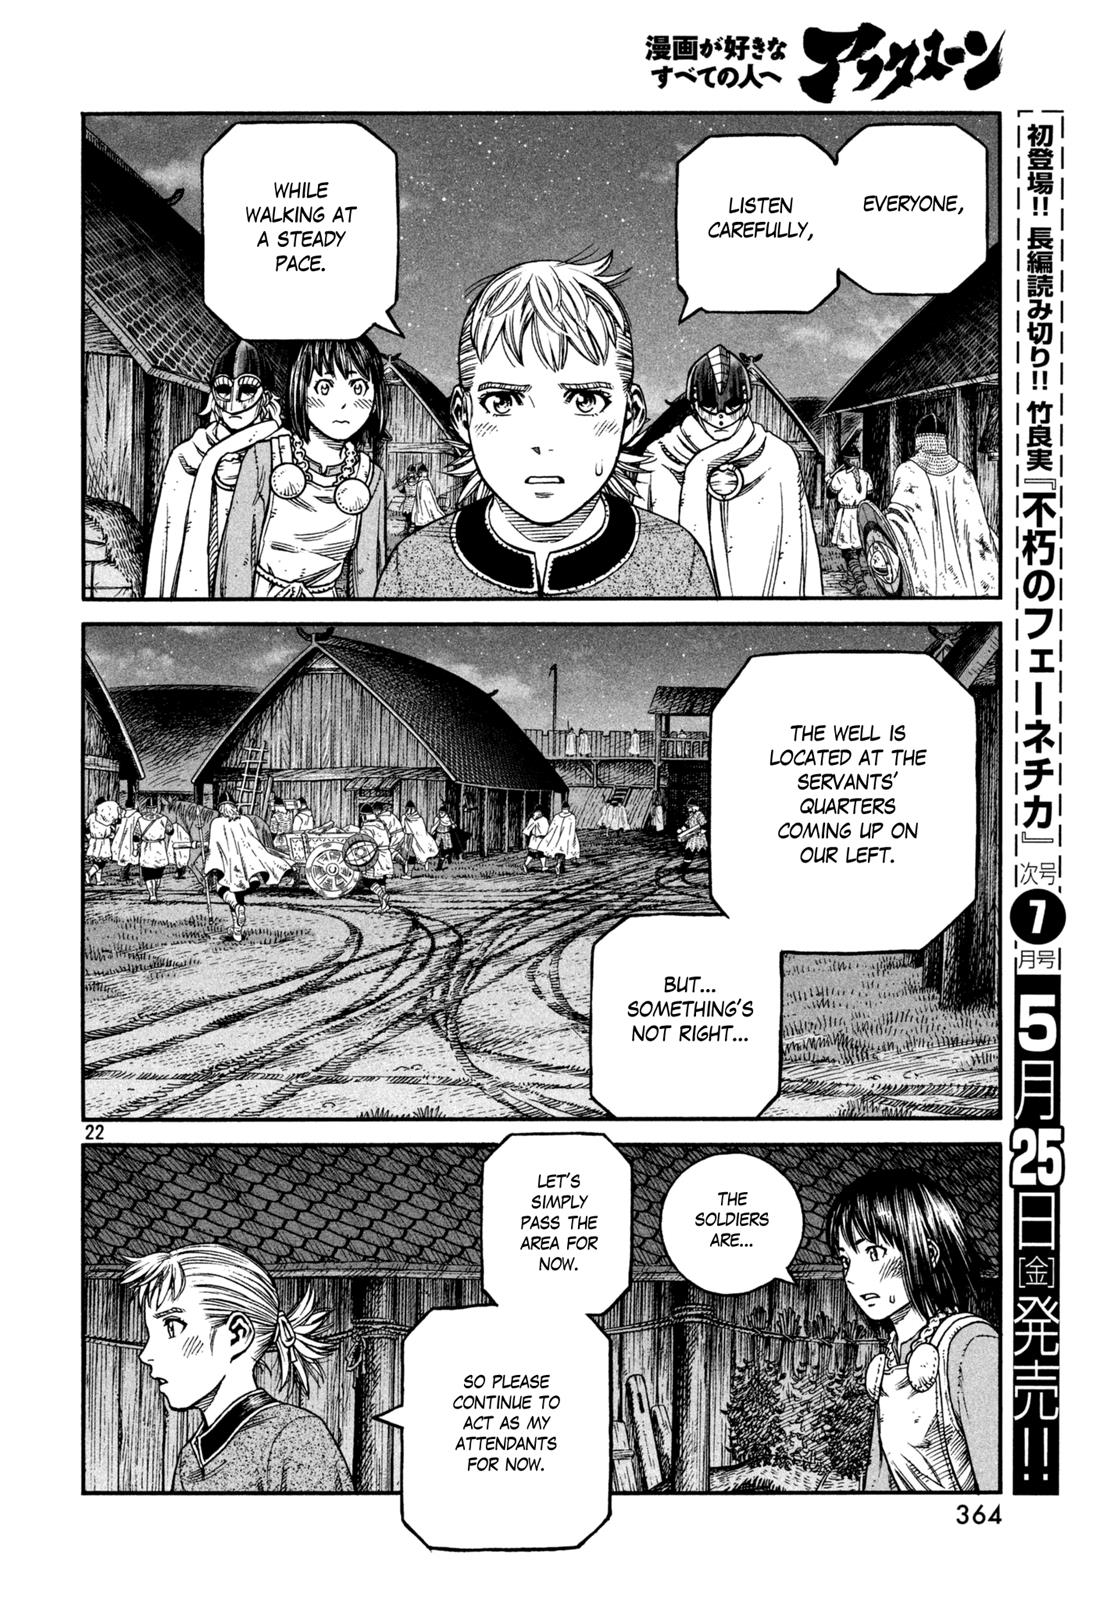 Vinland Saga Manga Manga Chapter - 149 - image 22